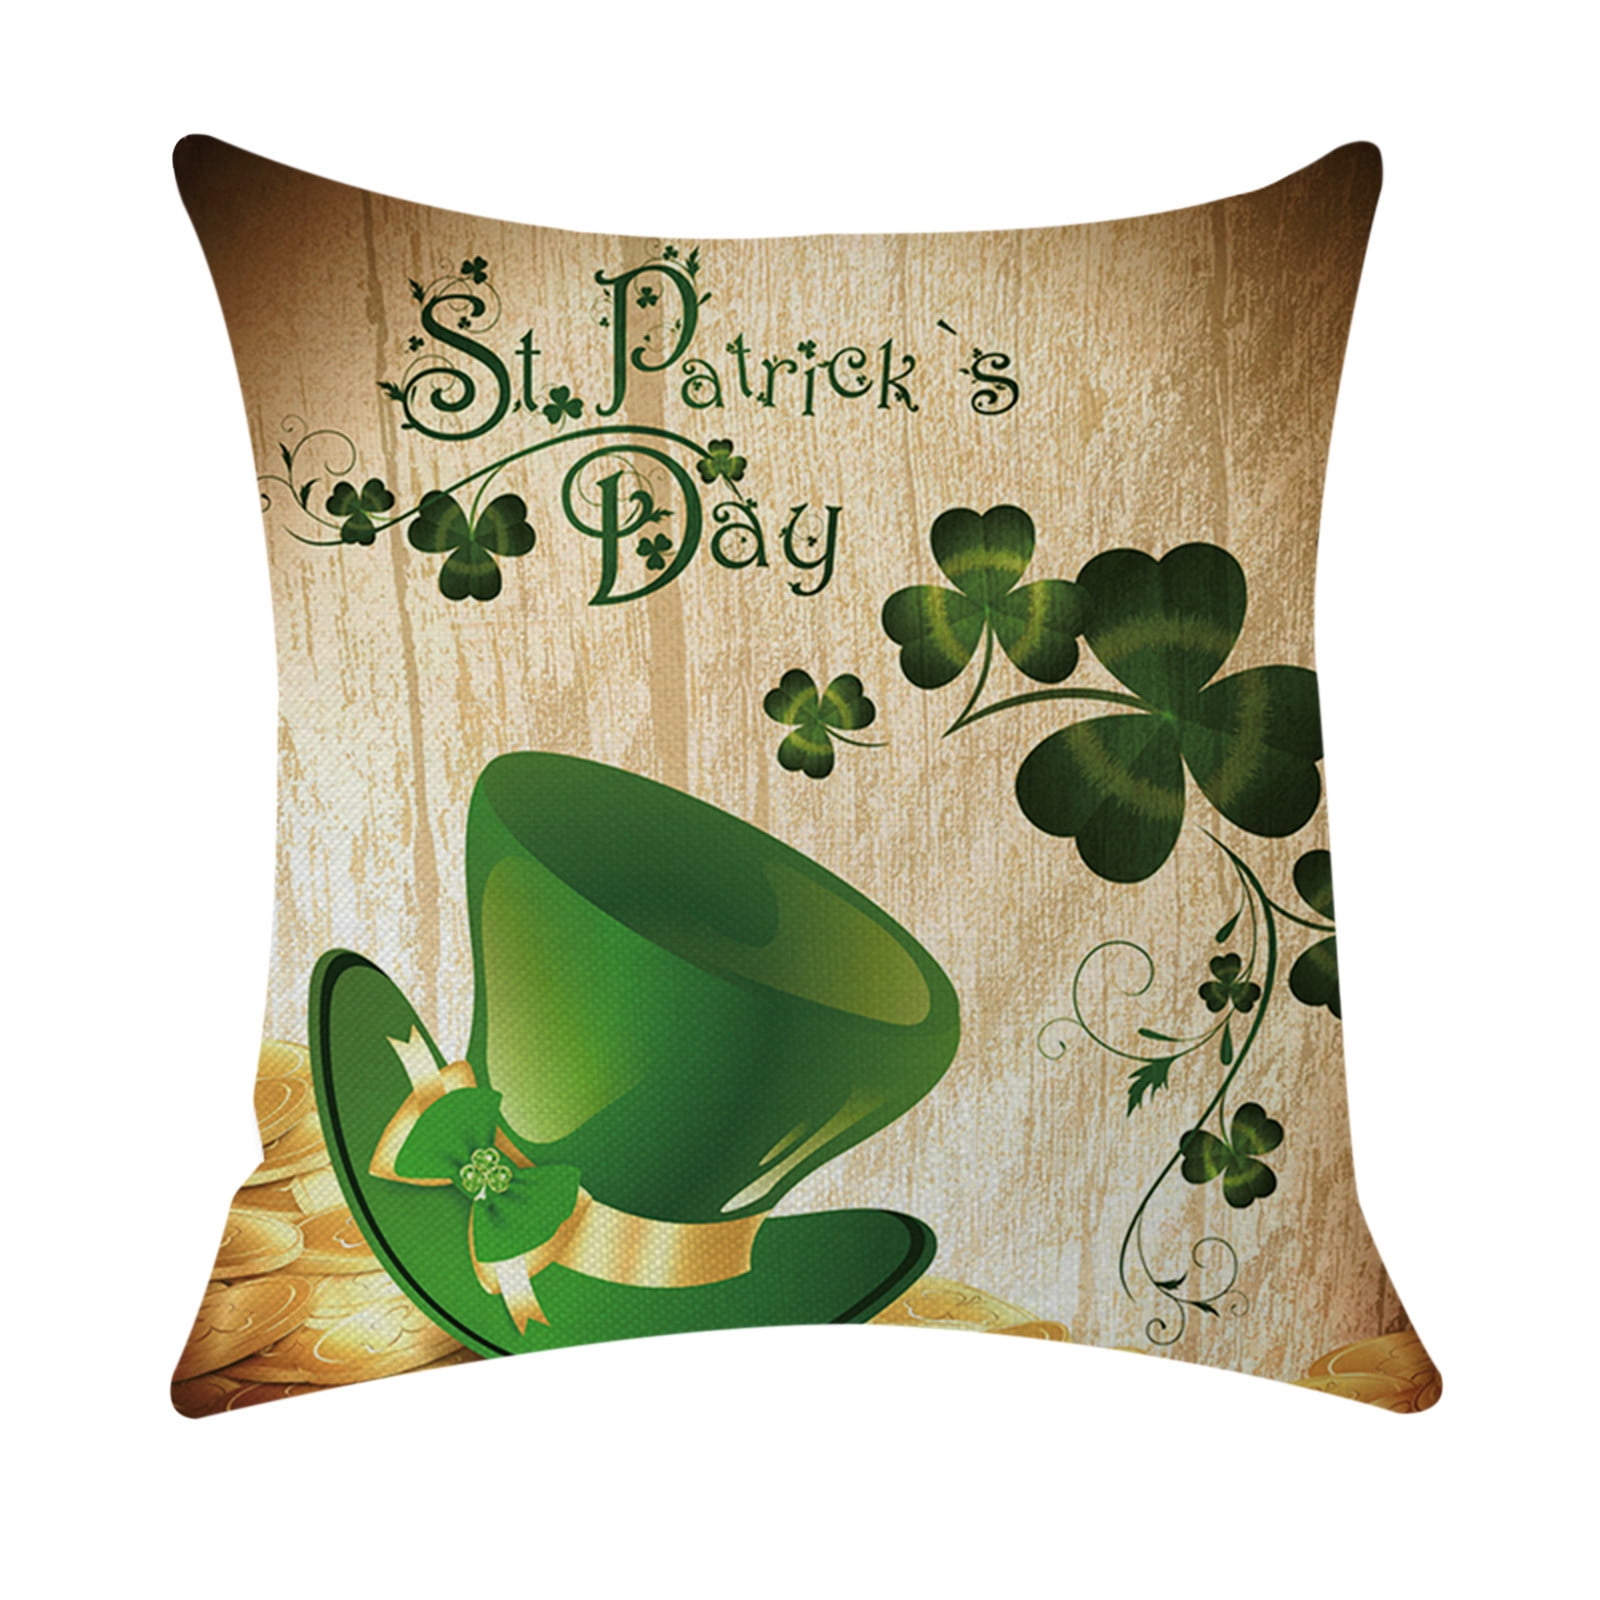 18'' Cotton linen green leaves pillow case cover sofa cushion cover Home Decor